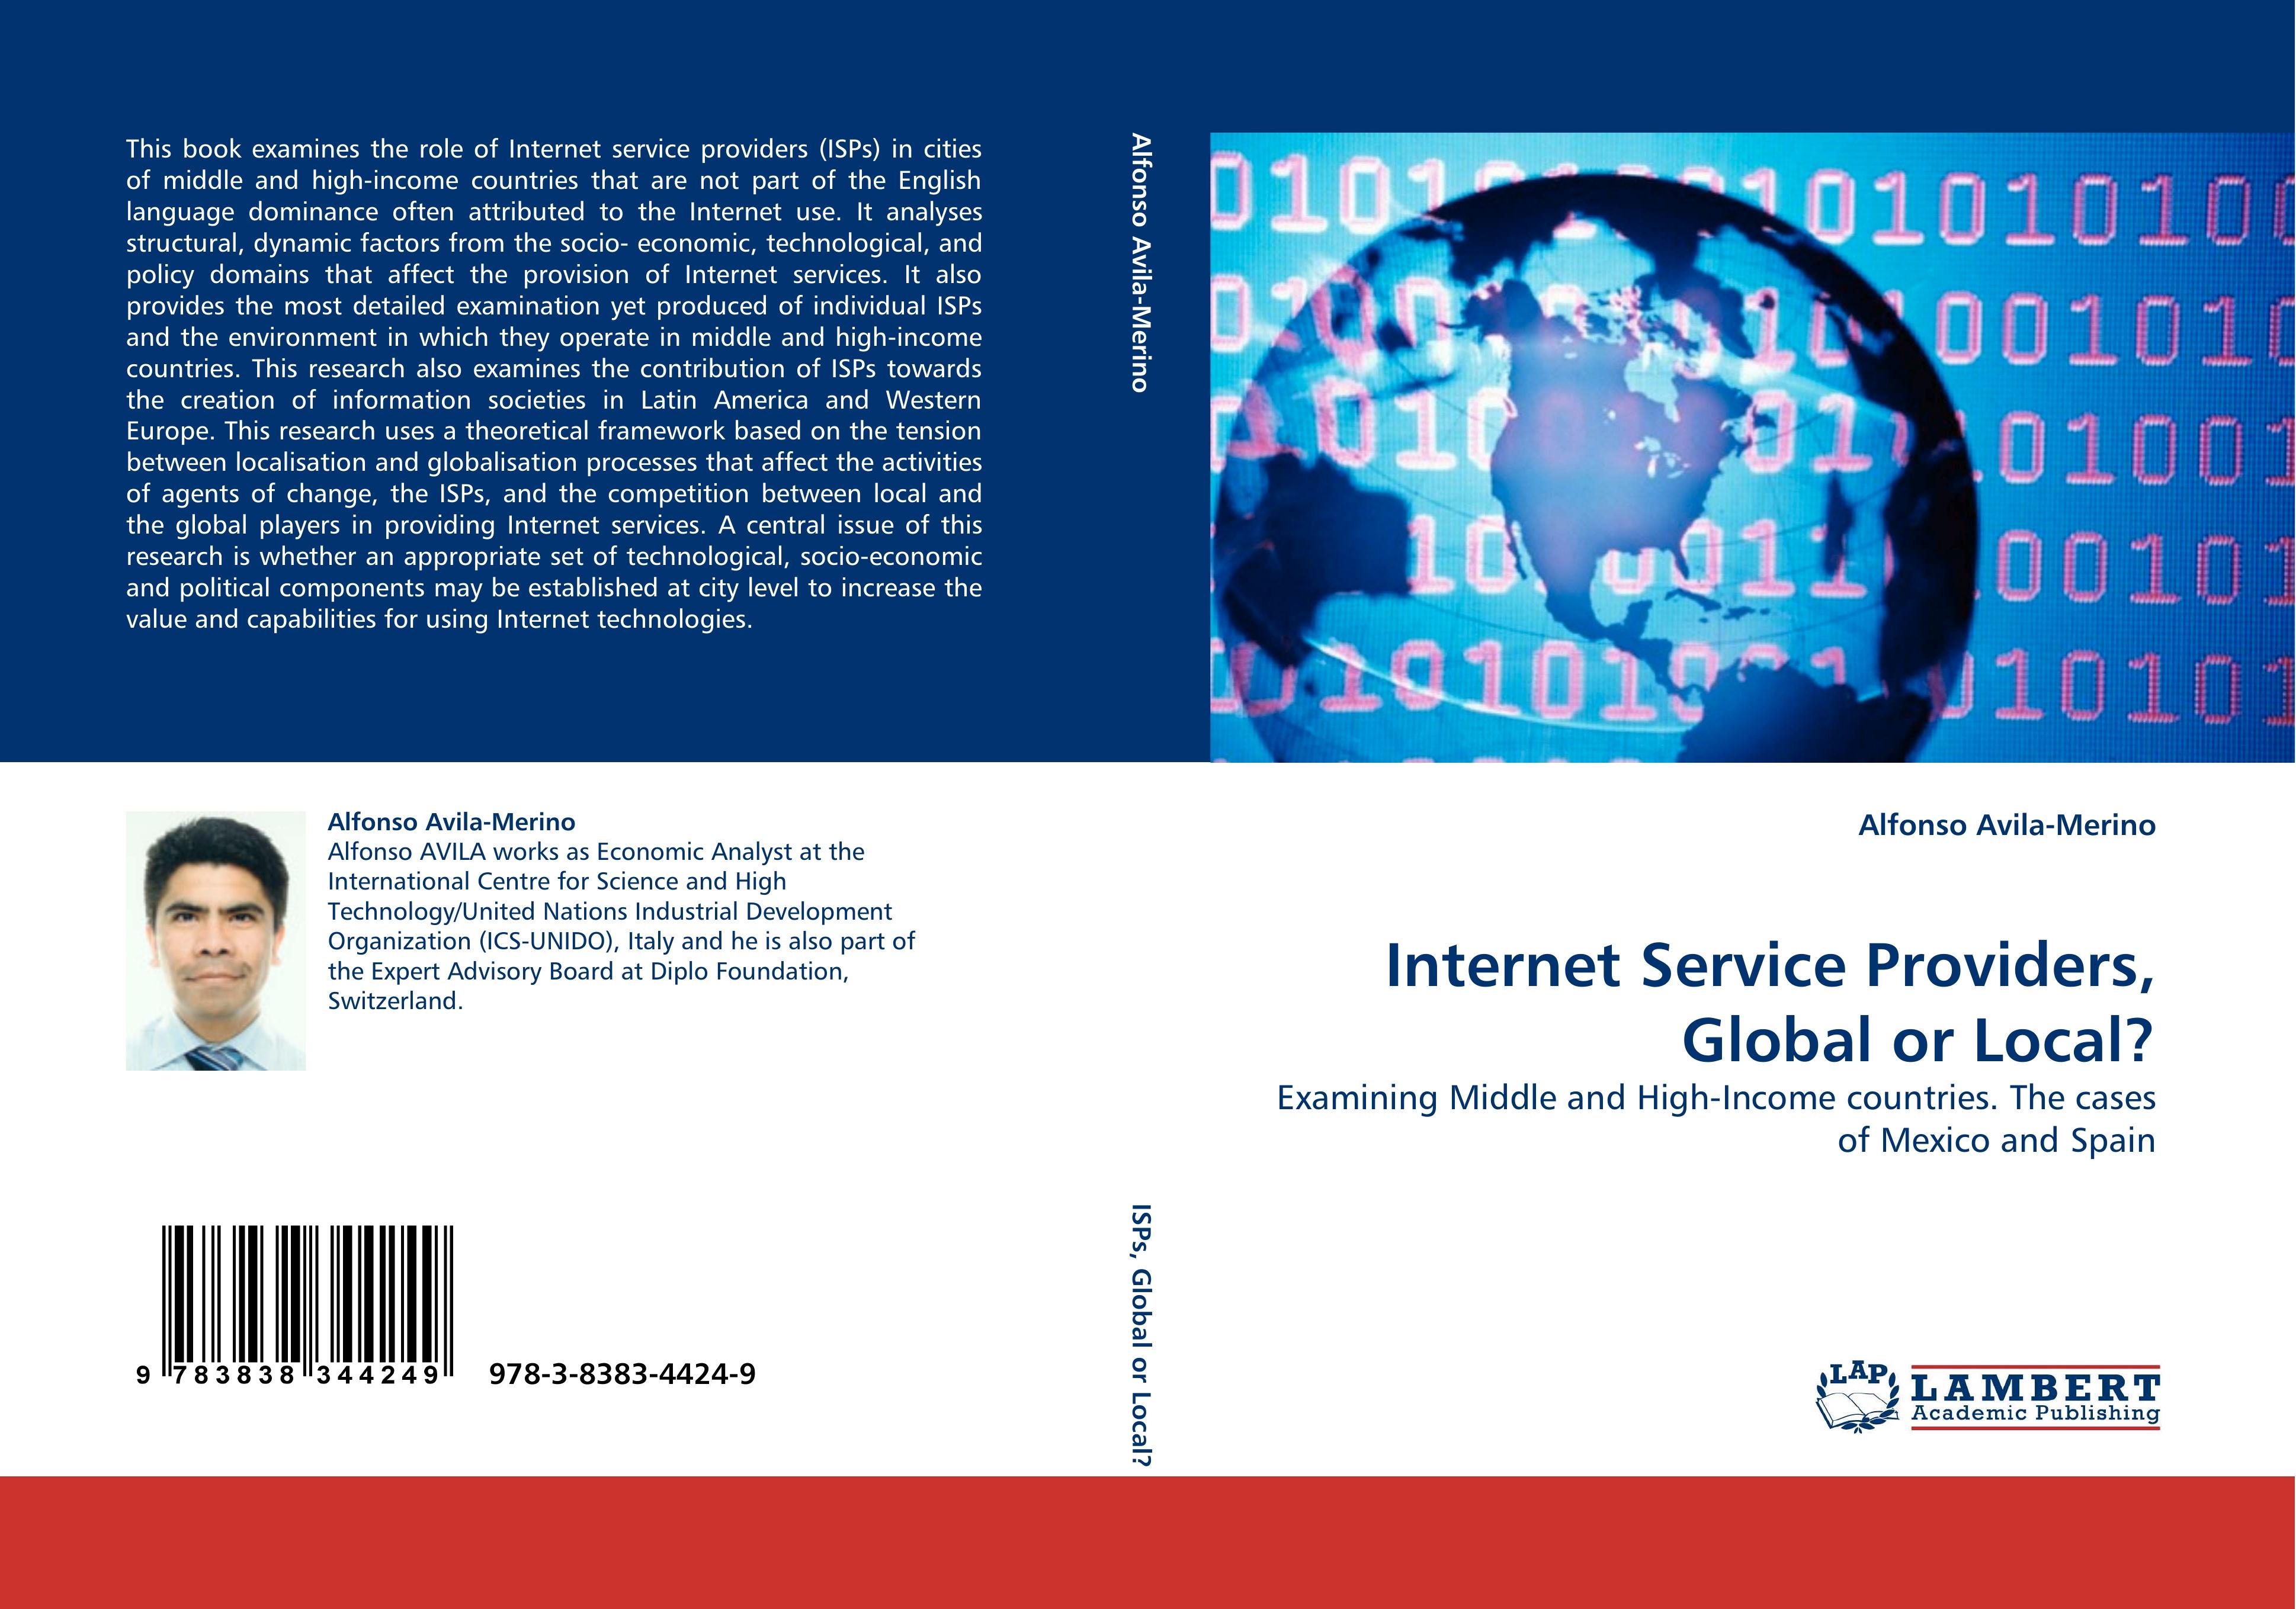 Internet Service Providers, Global or Local? - Alfonso Avila-Merino